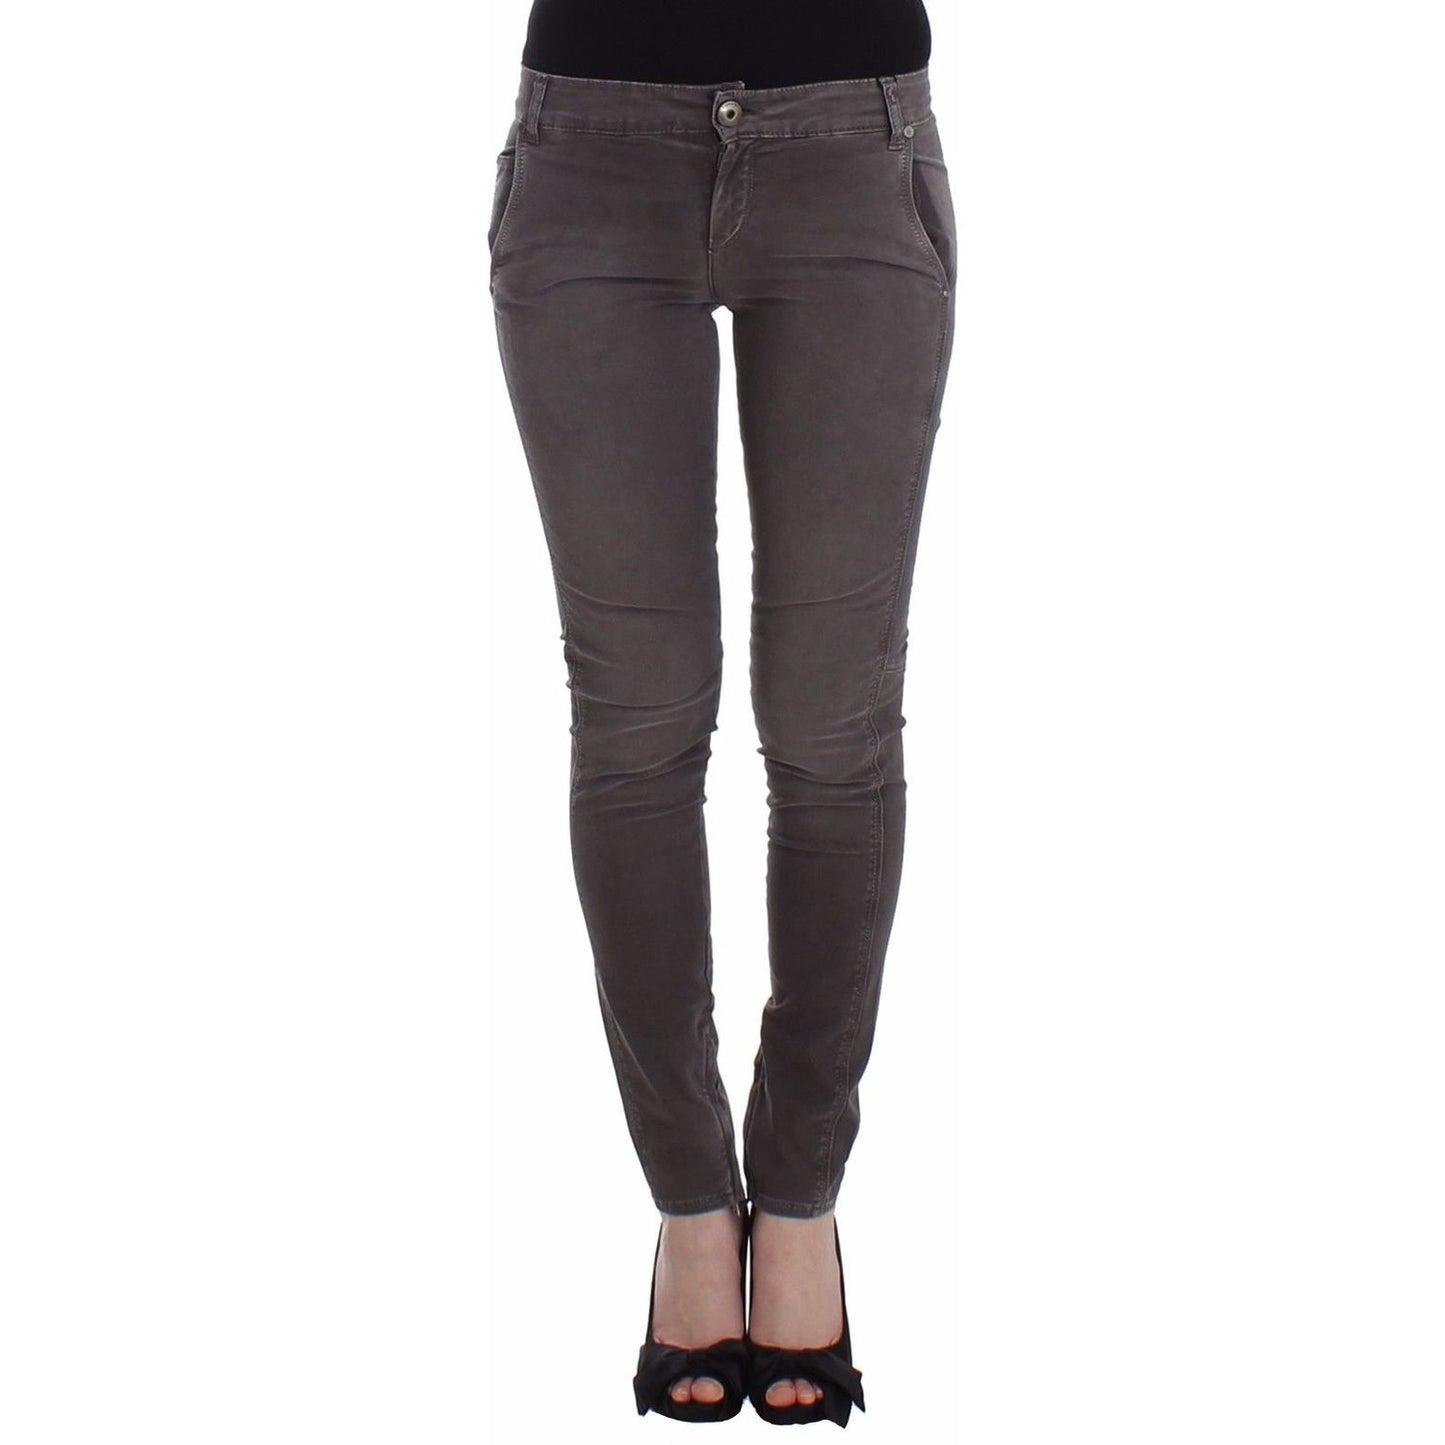 Ermanno Scervino Chic Gray Slim Leg Jeans - Elegance Meets Comfort gray-slim-jeans-denim-pants-skinny-leg-stretch-1 37416-gray-slim-jeans-denim-pants-skinny-leg-stretch-2.jpg